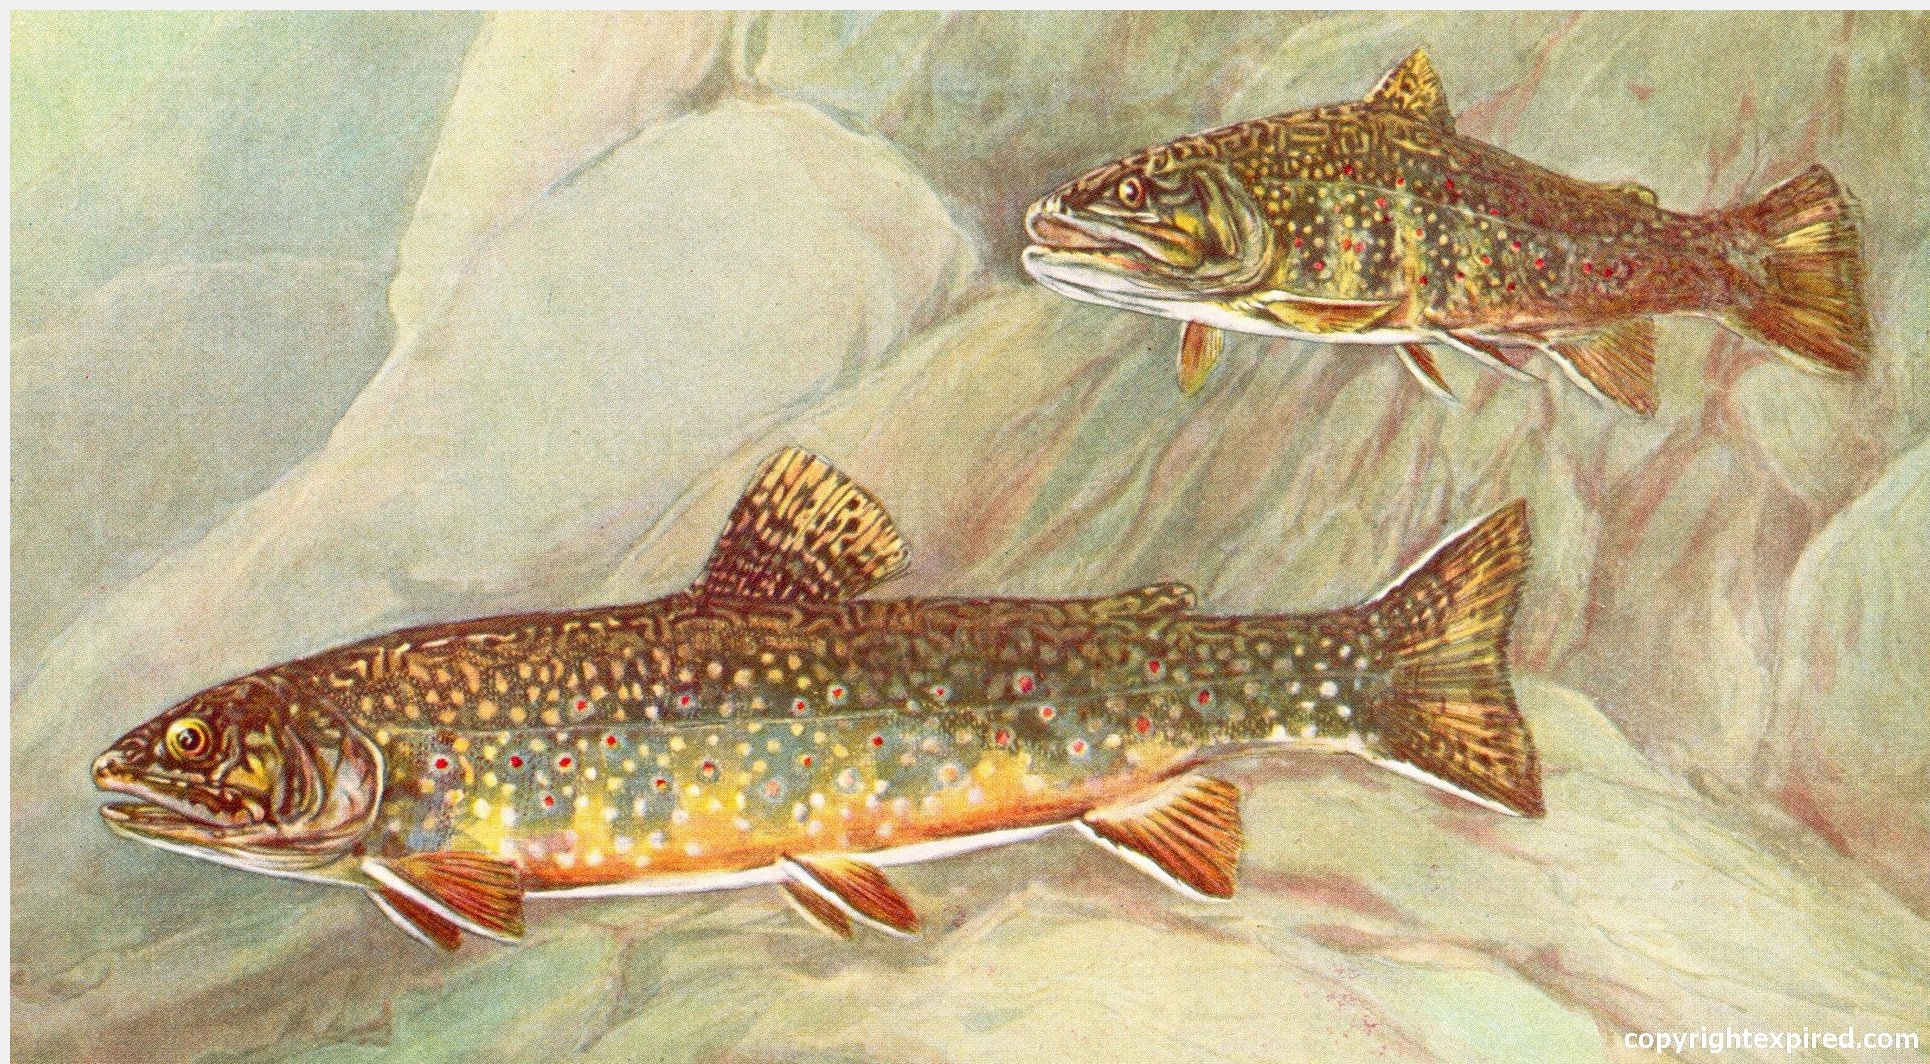 Trout antique fish illustrations for crafts school brochures clip art